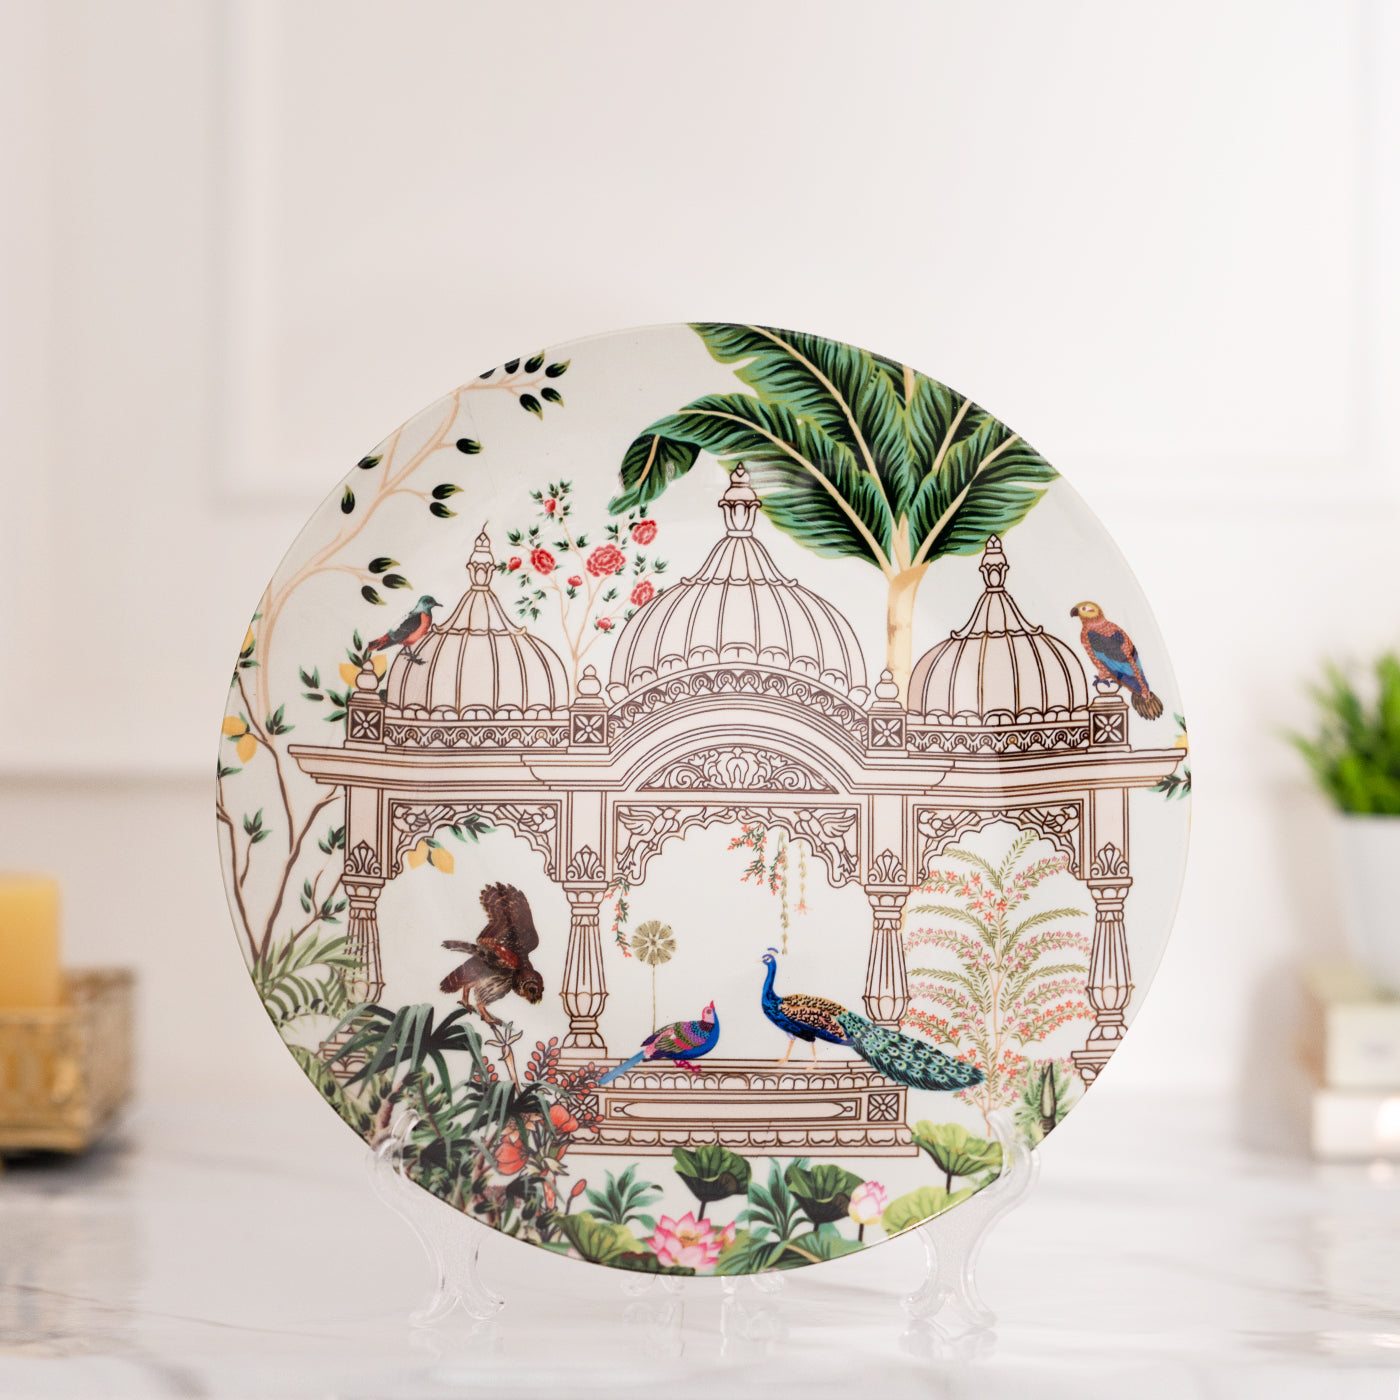 Renaissance Ceramic wall plates decor hanging / tabletop